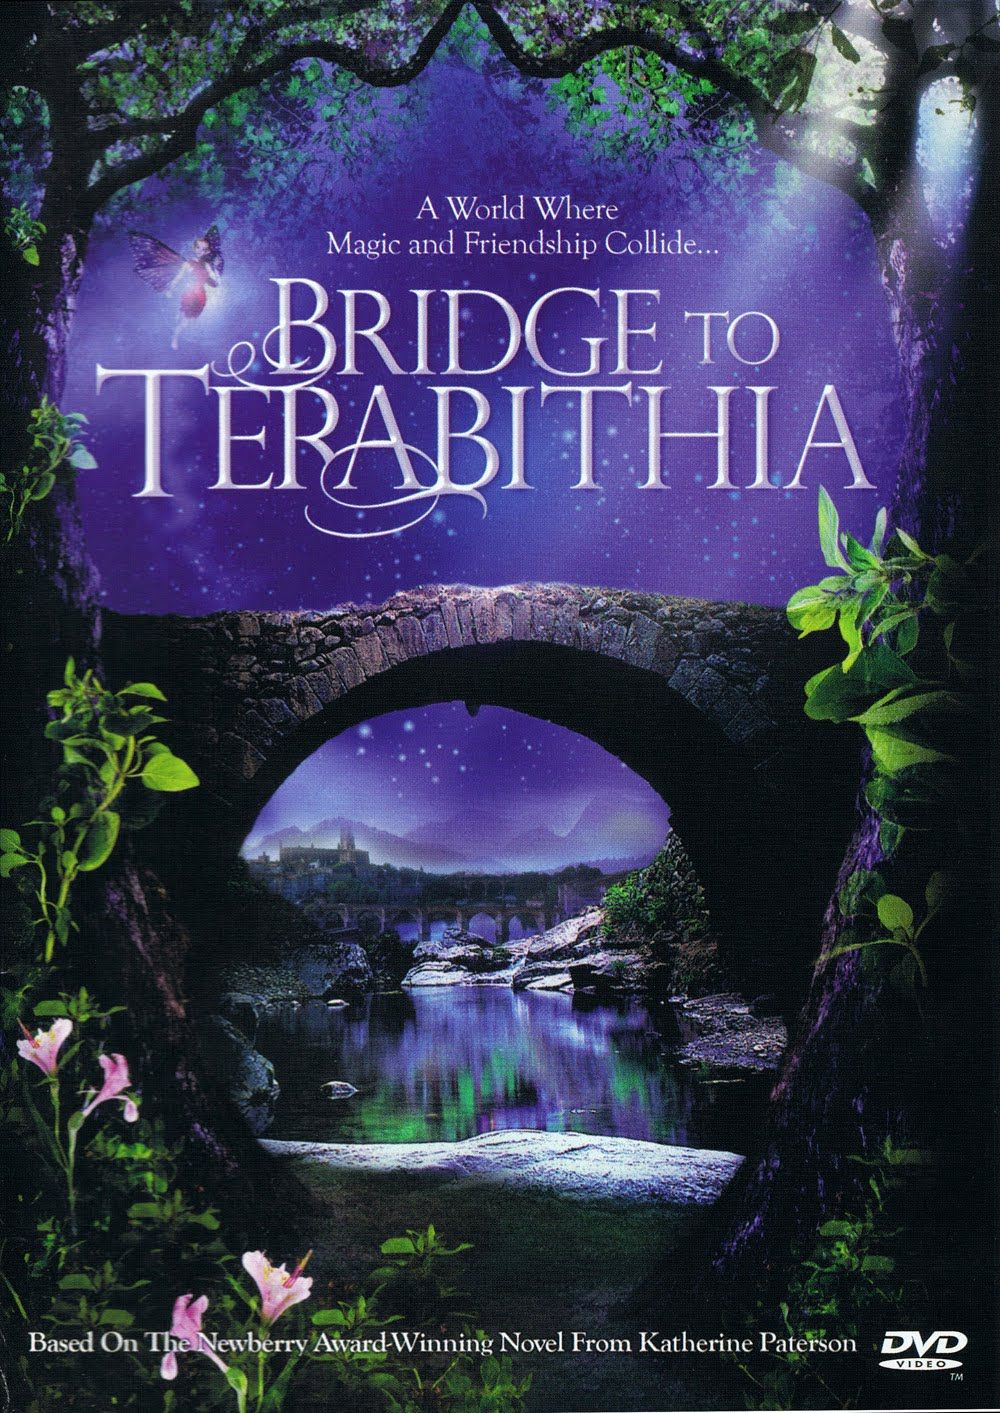 The cover for the book Bridge to Terabithia